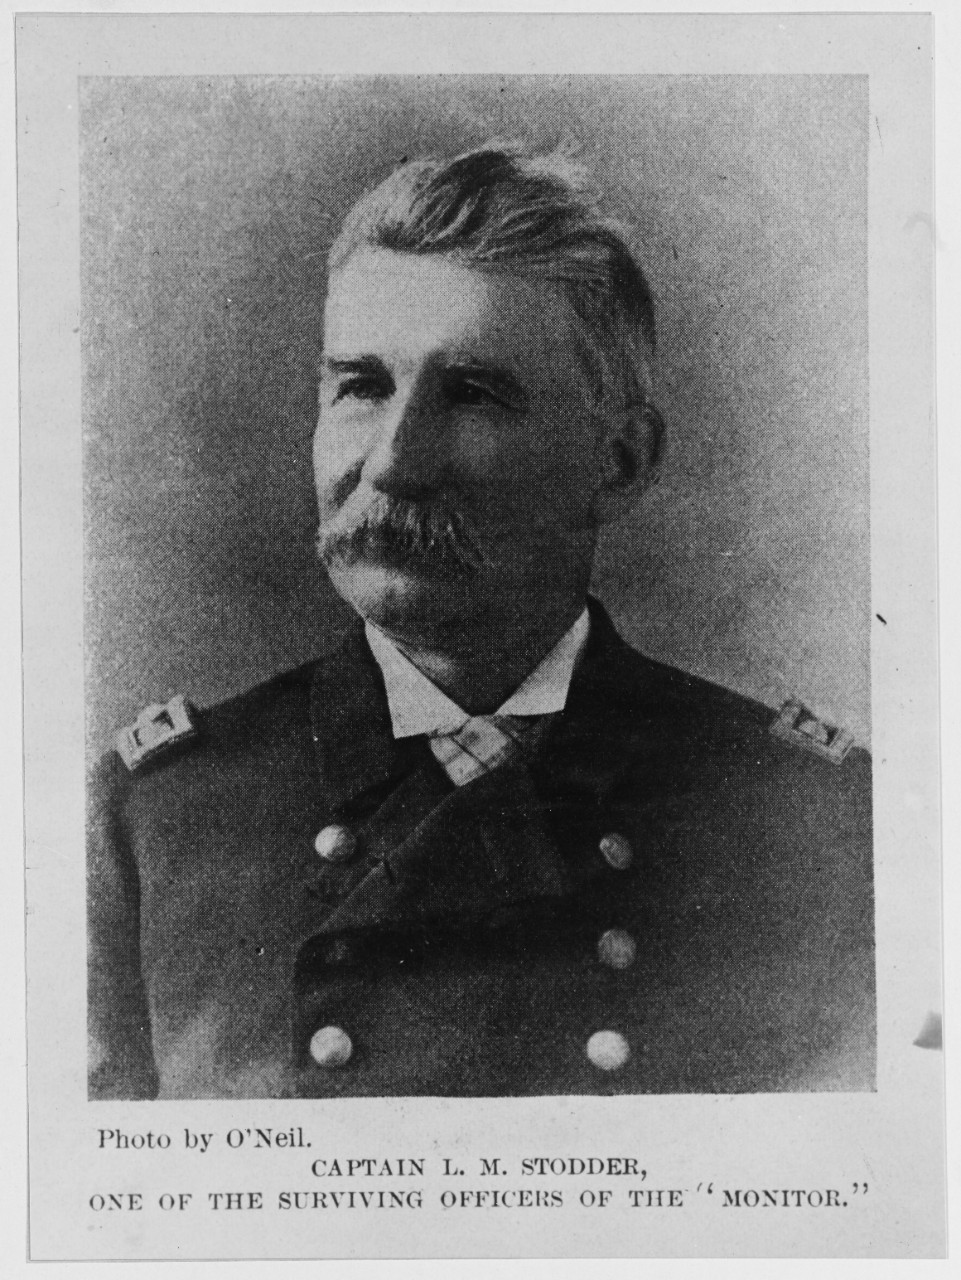 L. M. Stodder, Captain, United States Revenue Cutter Service